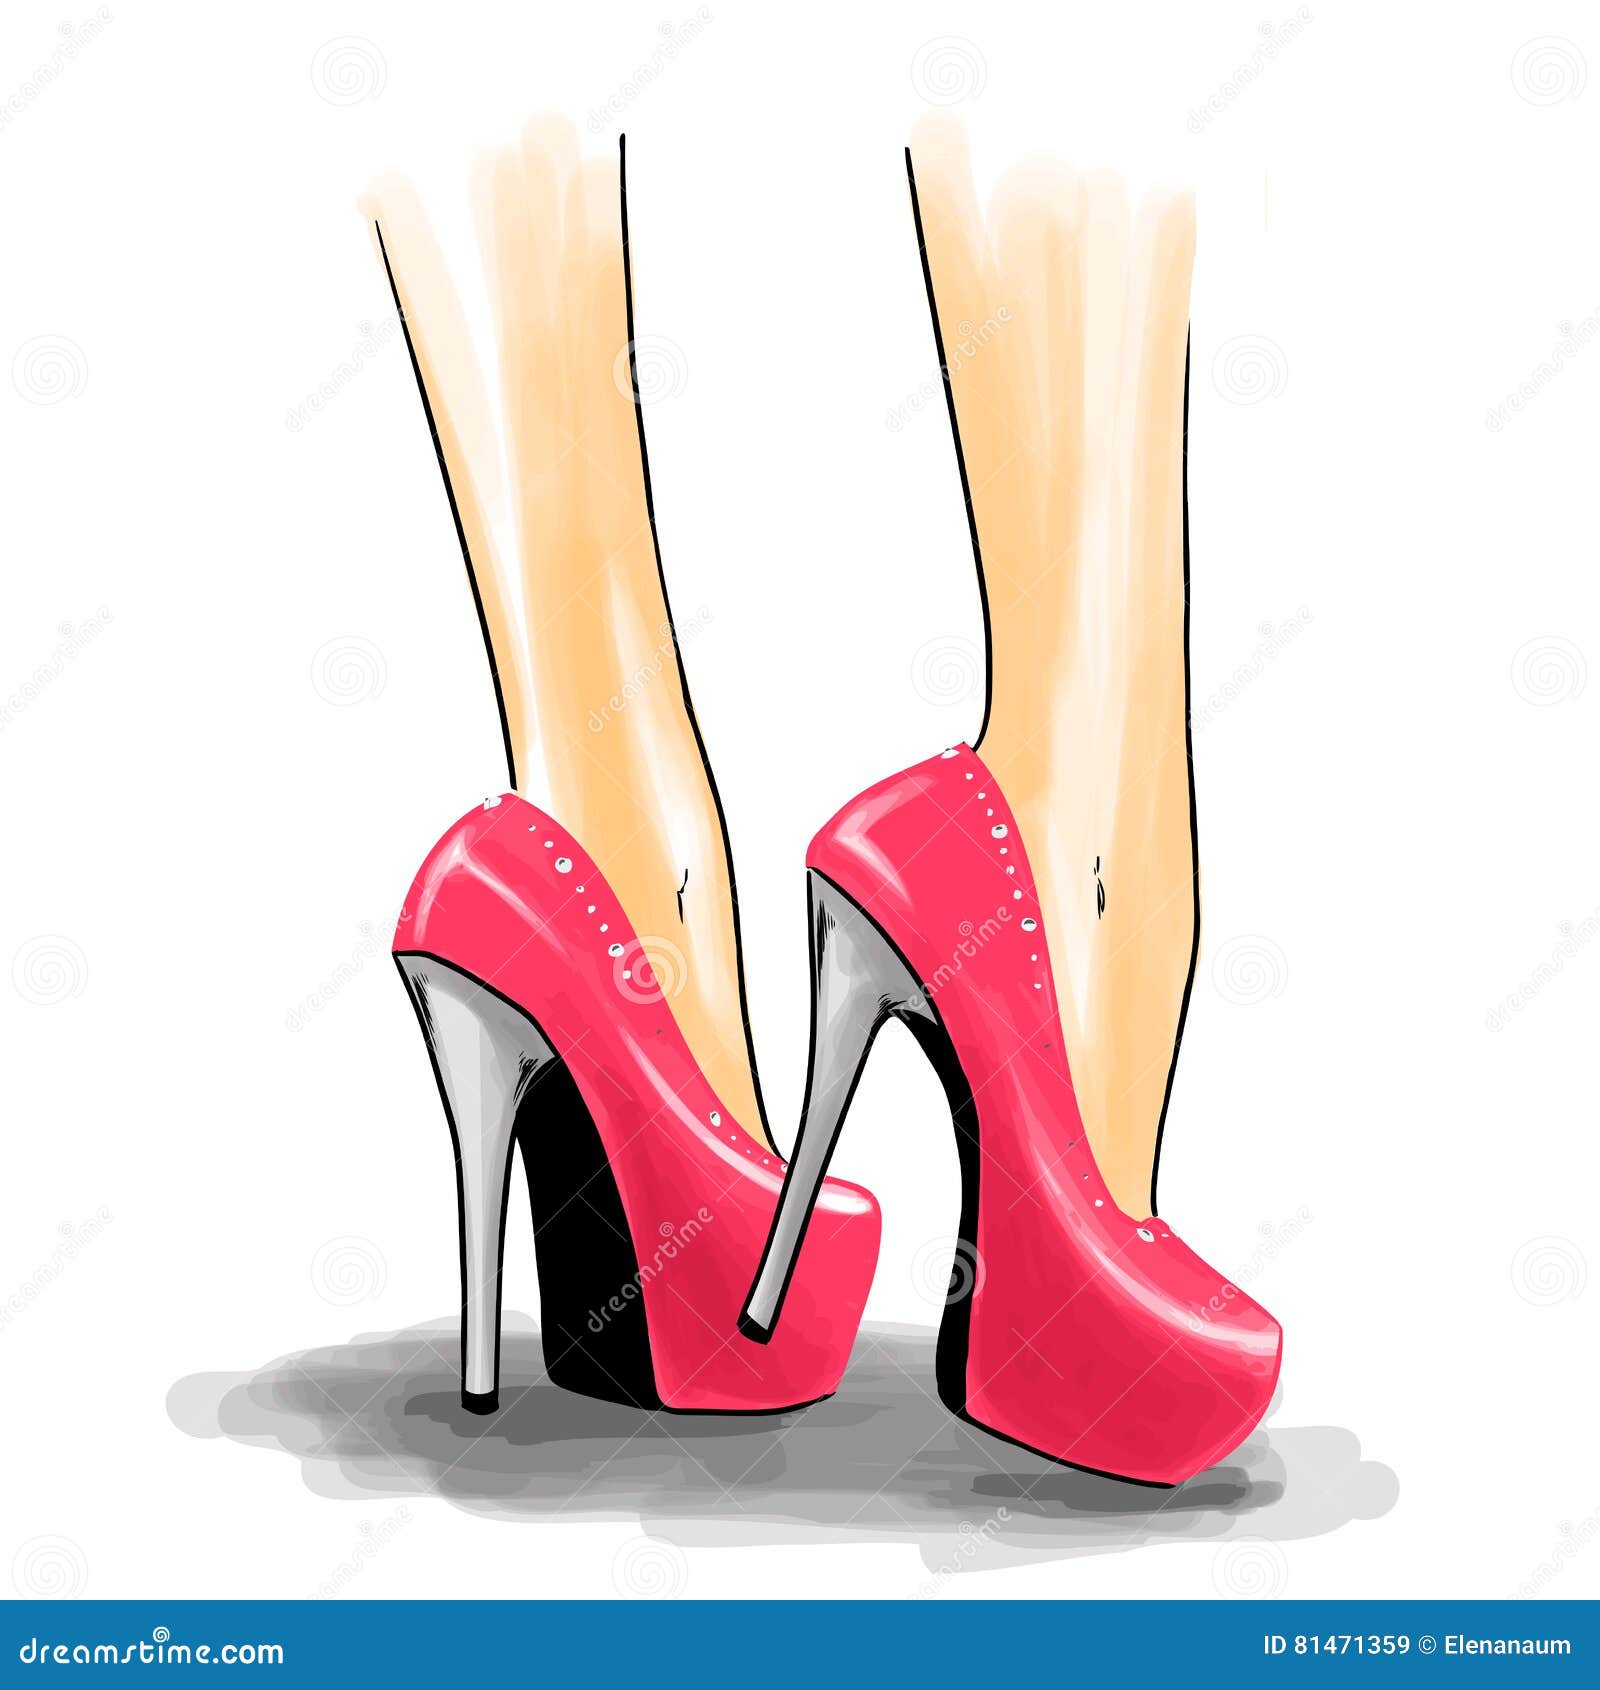 Amazon.com: Designart Leg Wearing High Heel Shoe Canvas Wall Art Print, 12